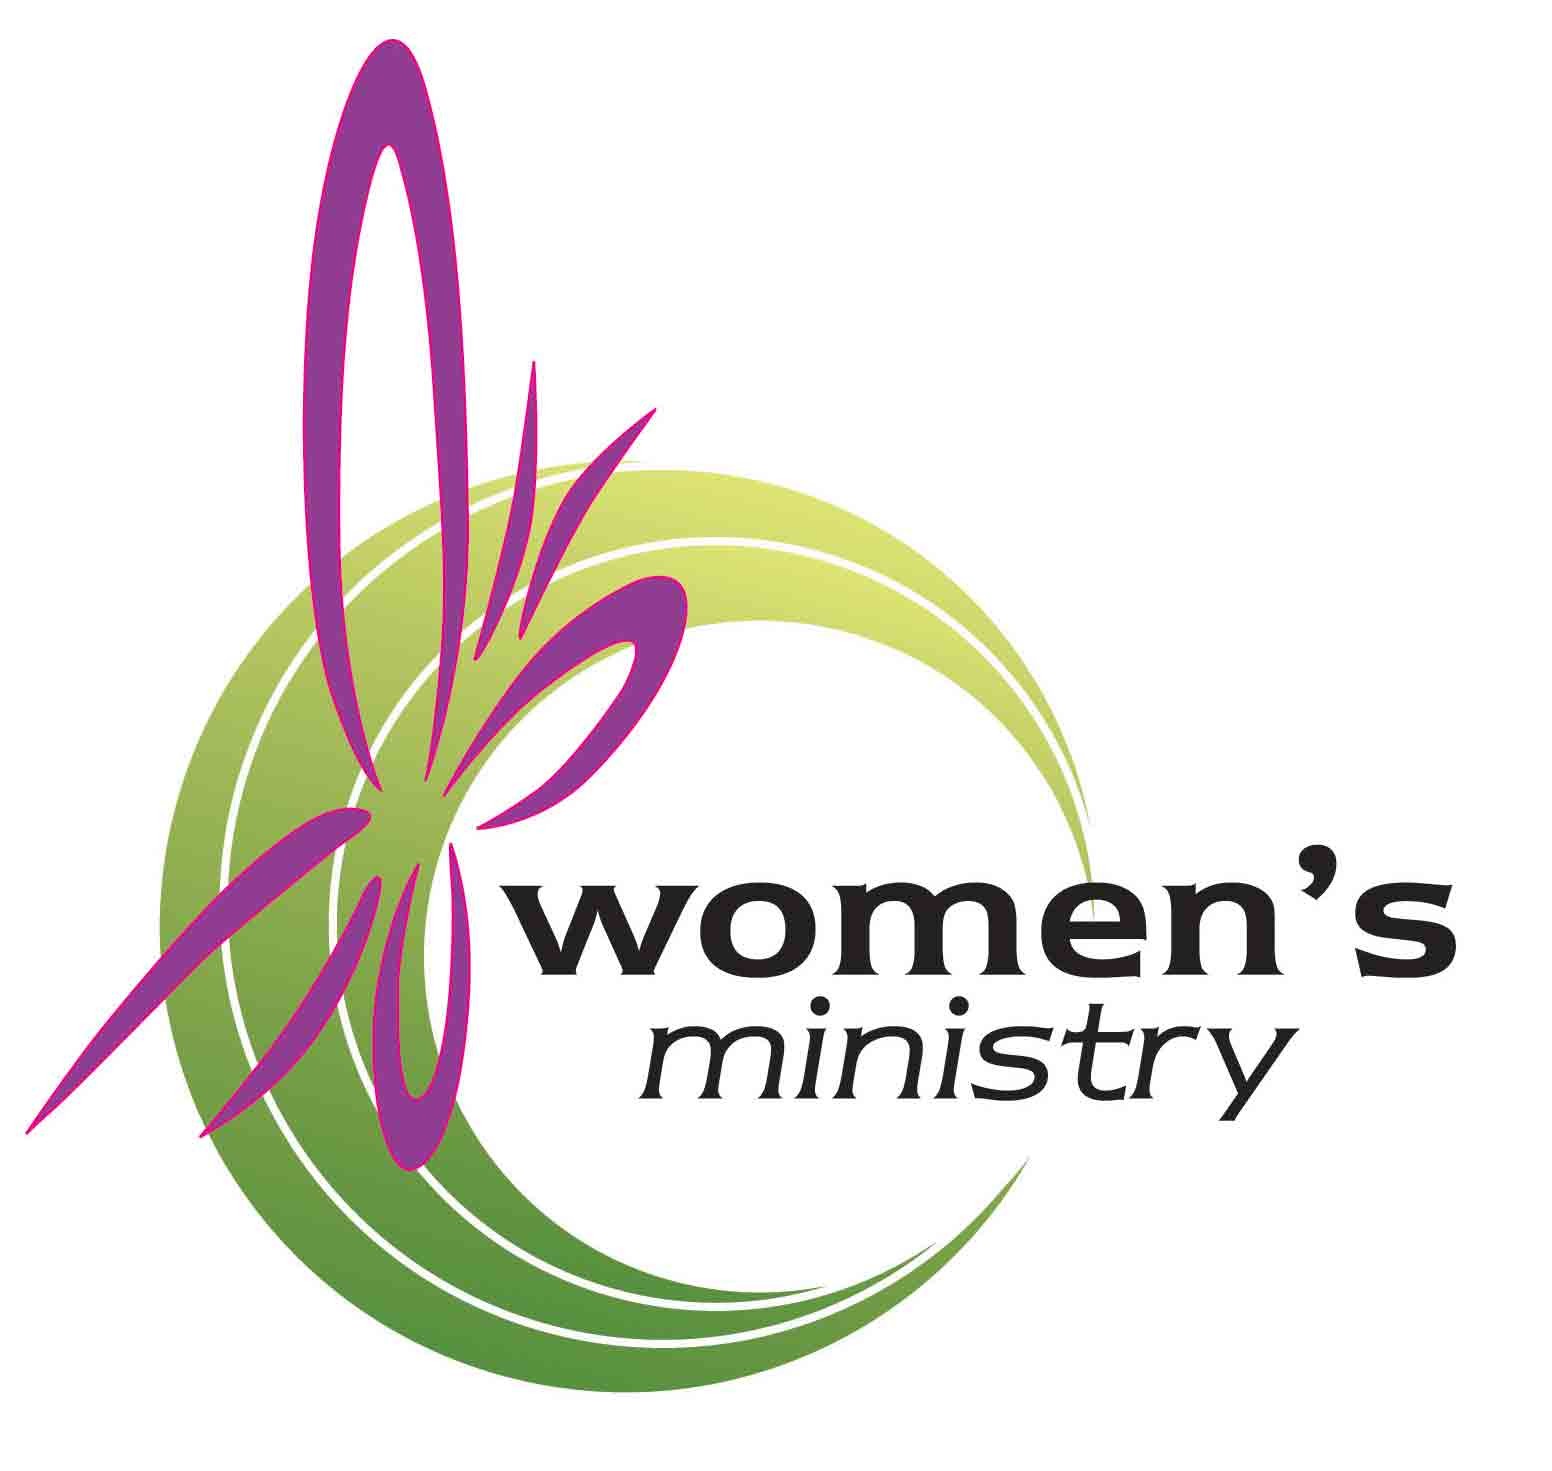 Women’s Ministry, logo free image download